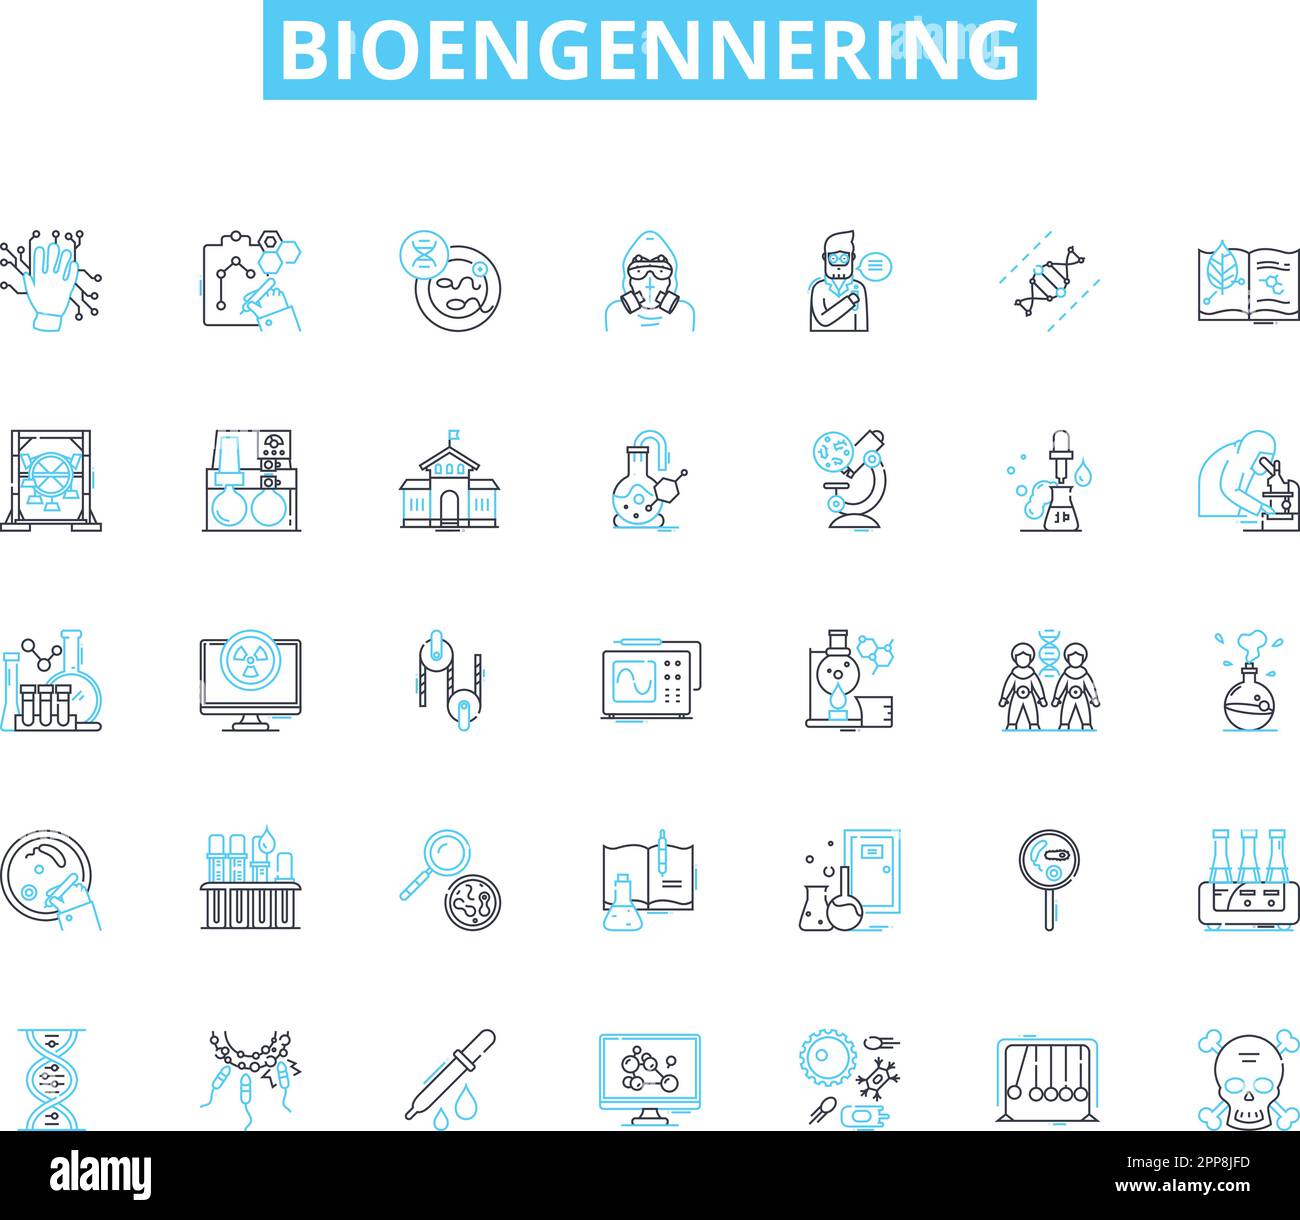 Set di icone lineari Bioengennering. Biomateriali, biomeccanica, bioprocessing, bioreattori, nanotecnologia, Ingegneria dei tessuti, linea di biocompatibilità Illustrazione Vettoriale